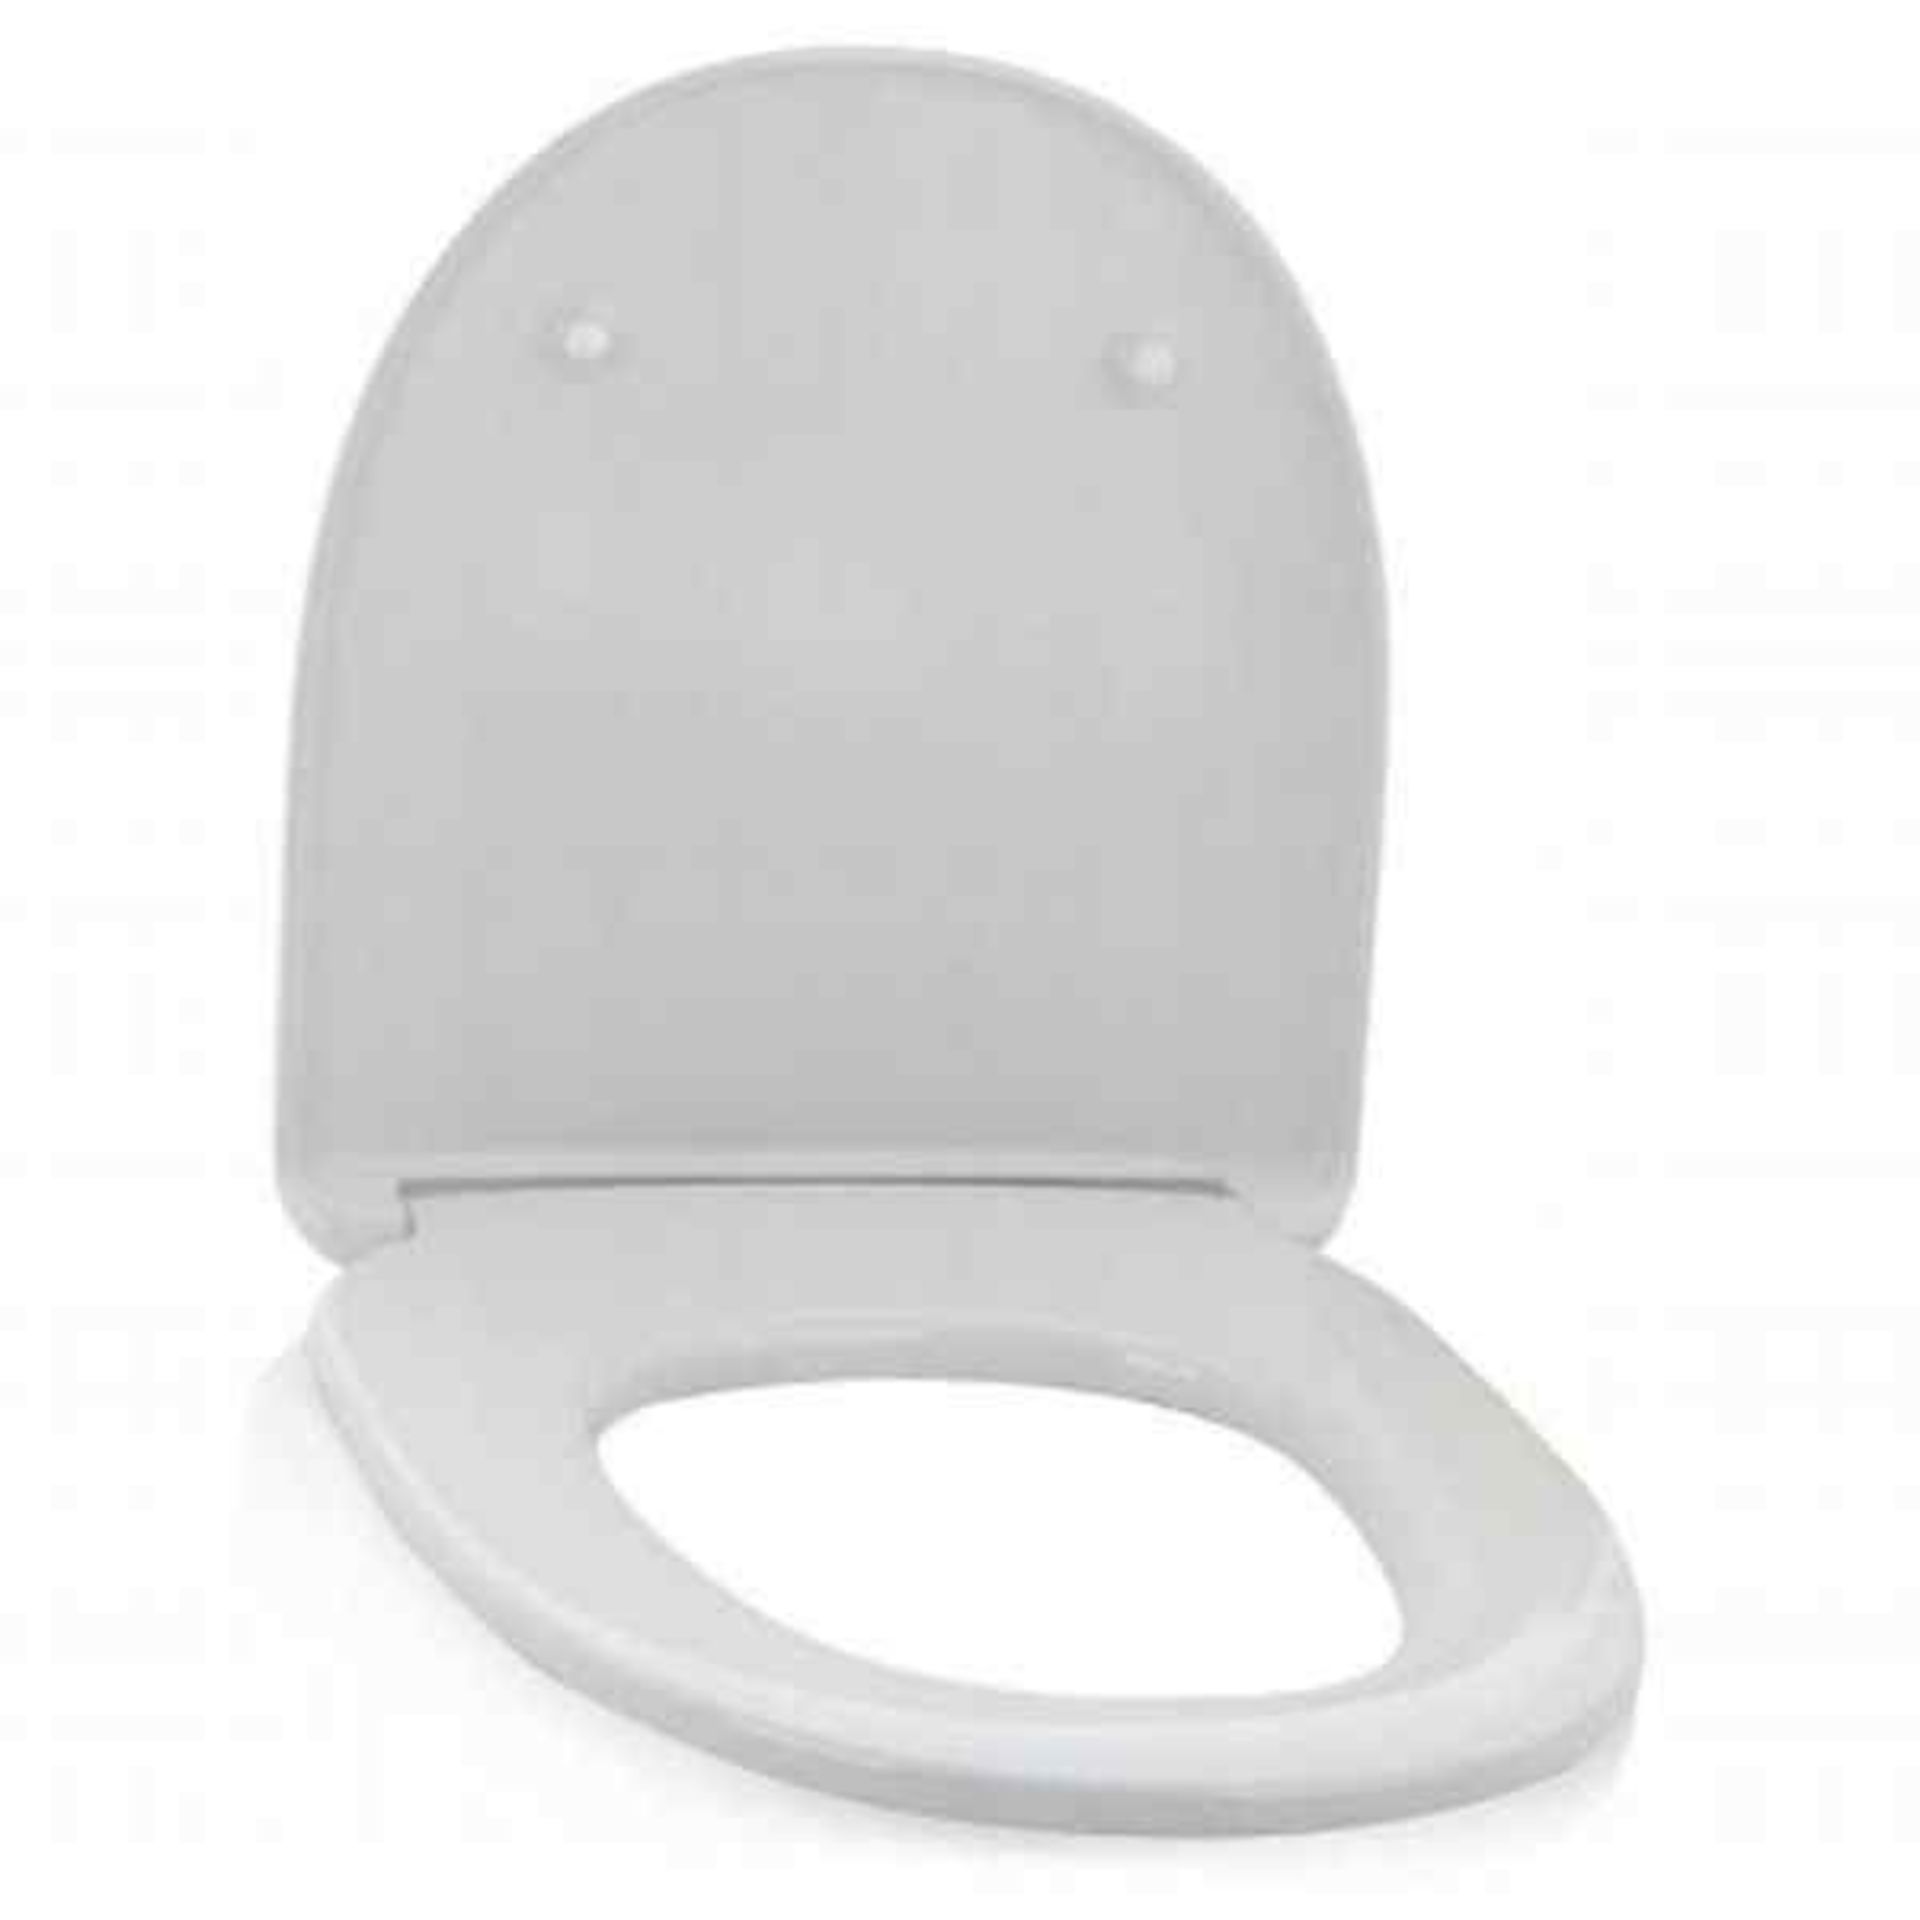 Lecico Lecico Universal Toilet Seat with SS Hinge - White